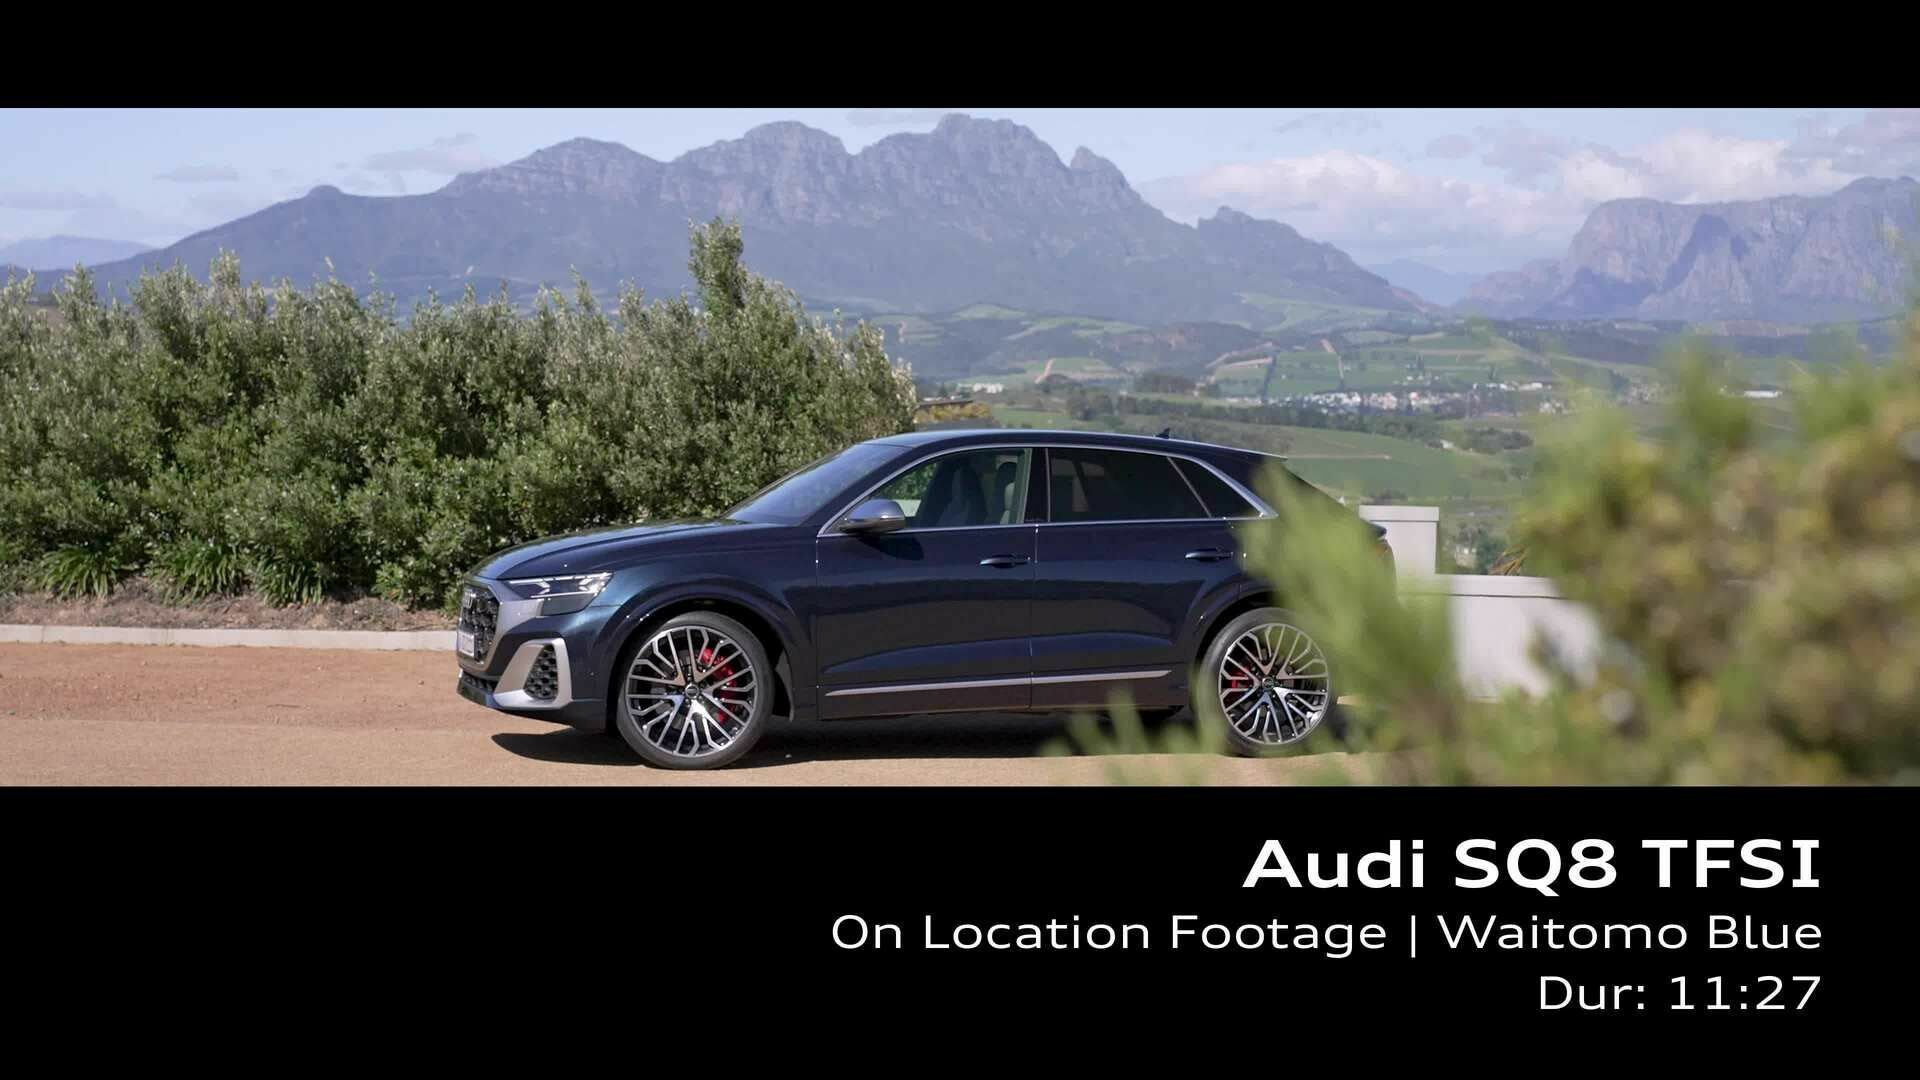 Audi SQ8 TFSI Waitomoblau – Footage